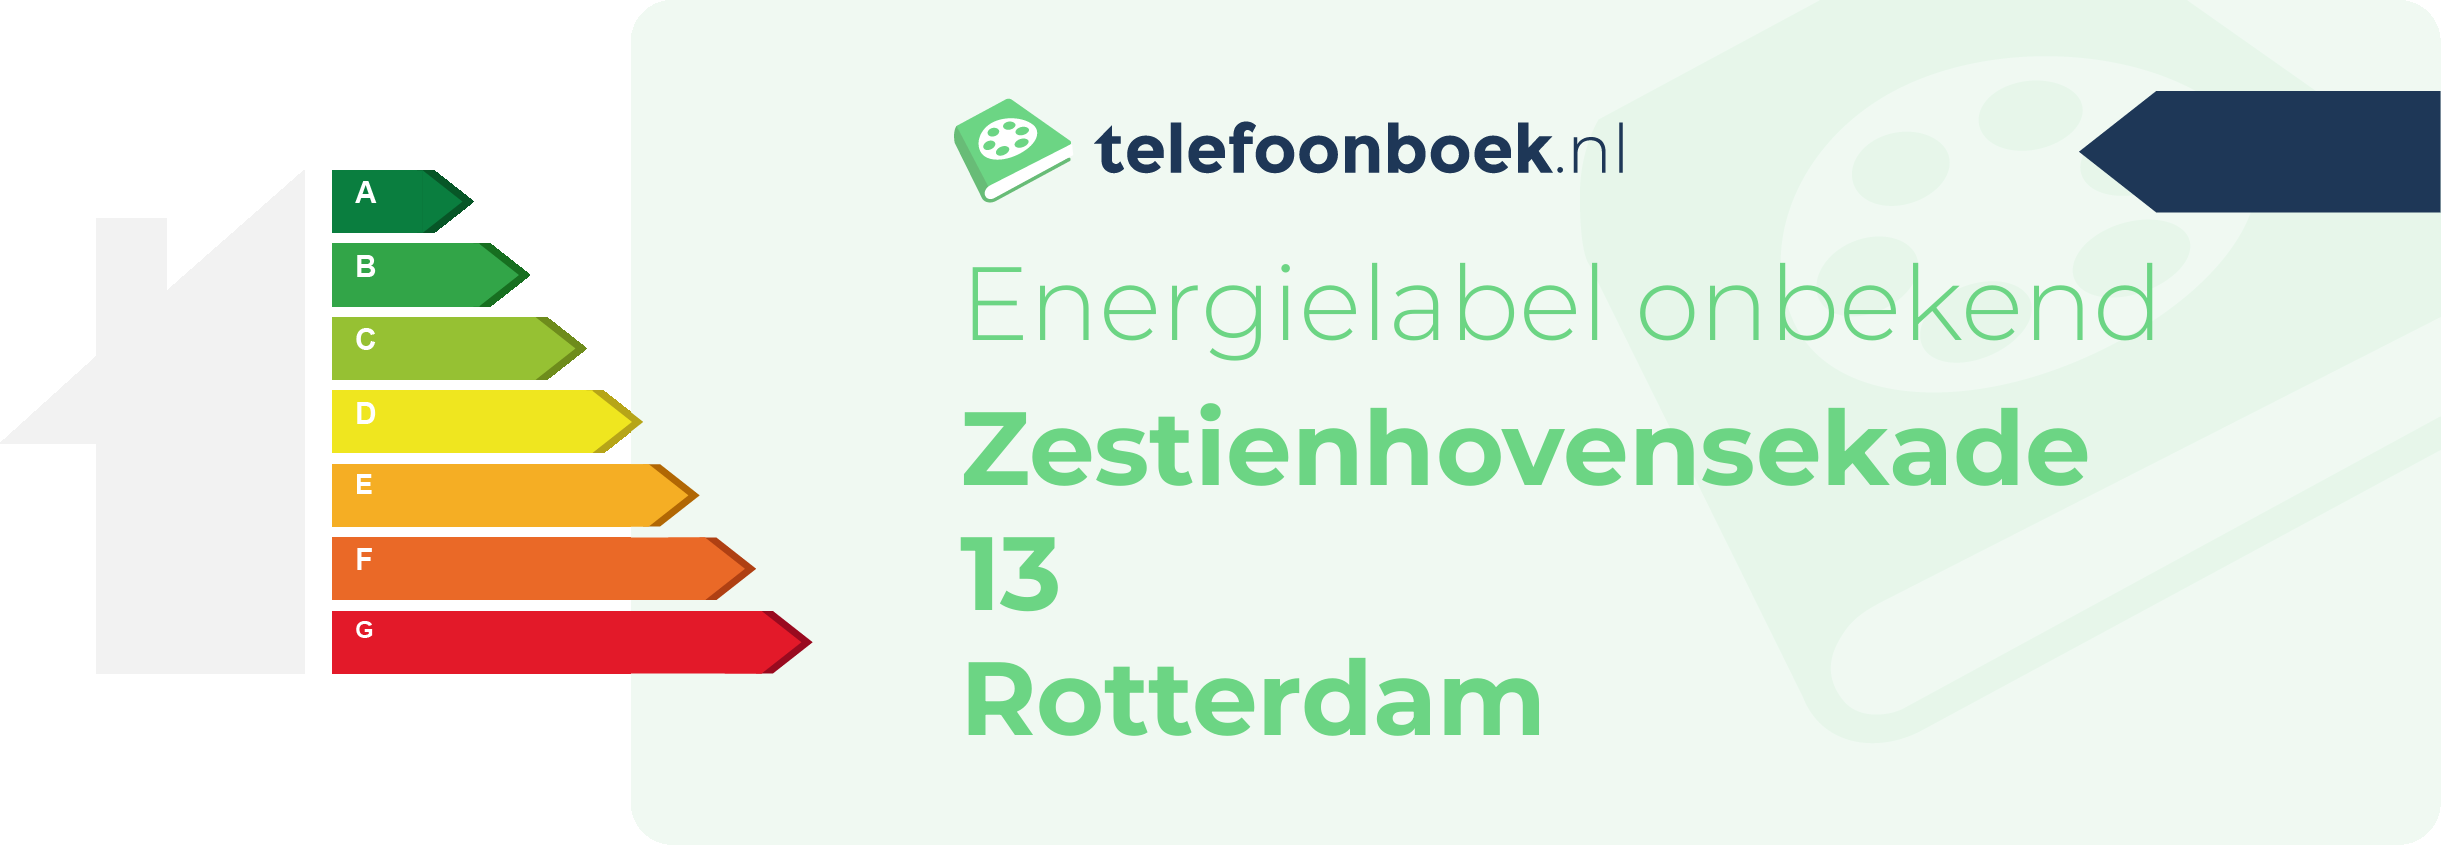 Energielabel Zestienhovensekade 13 Rotterdam